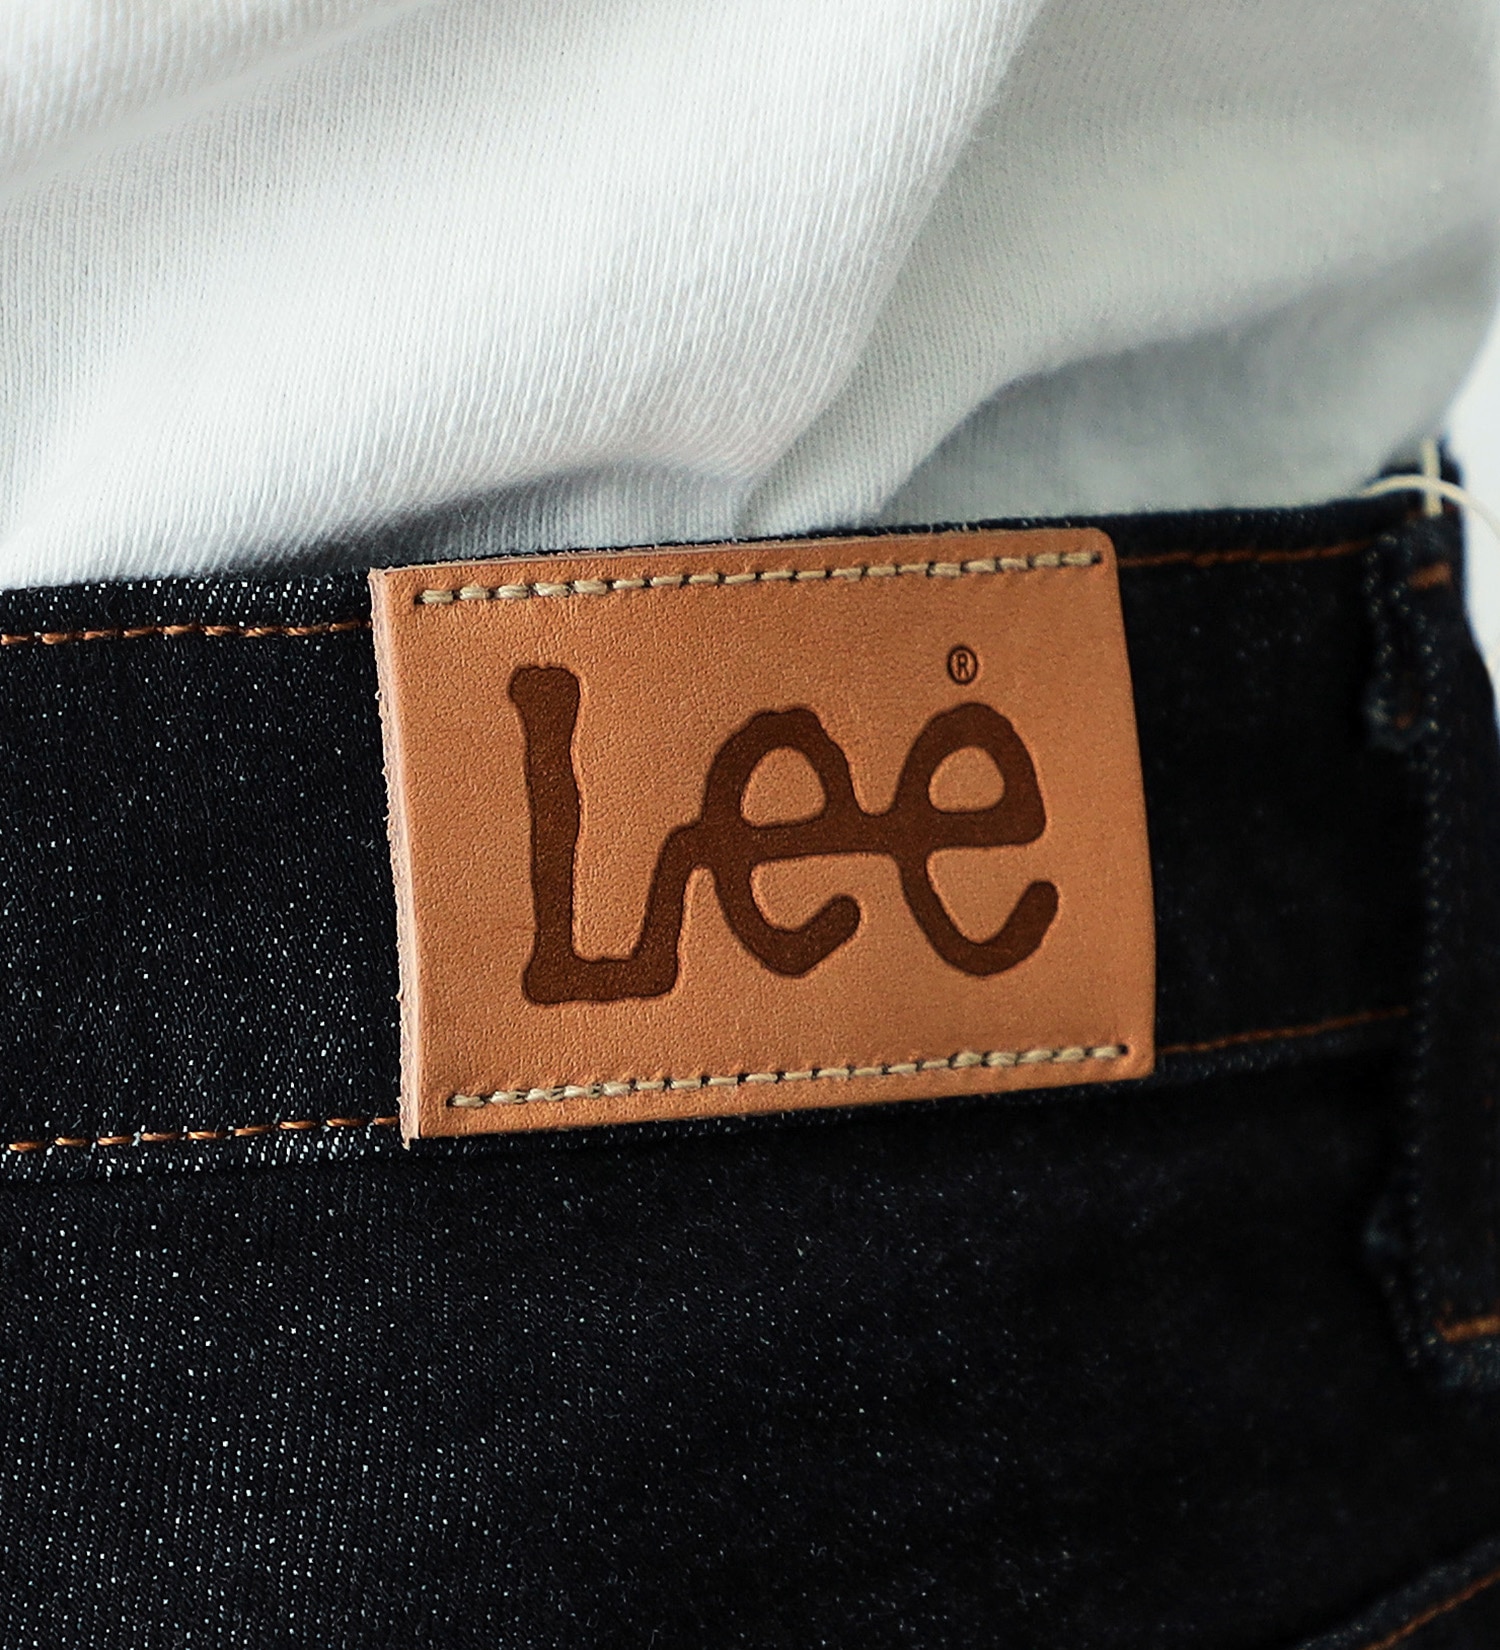 Lee(リー)の【超快適ストレッチ】キャロット スキニーパンツ|パンツ/デニムパンツ/メンズ|インディゴブルー